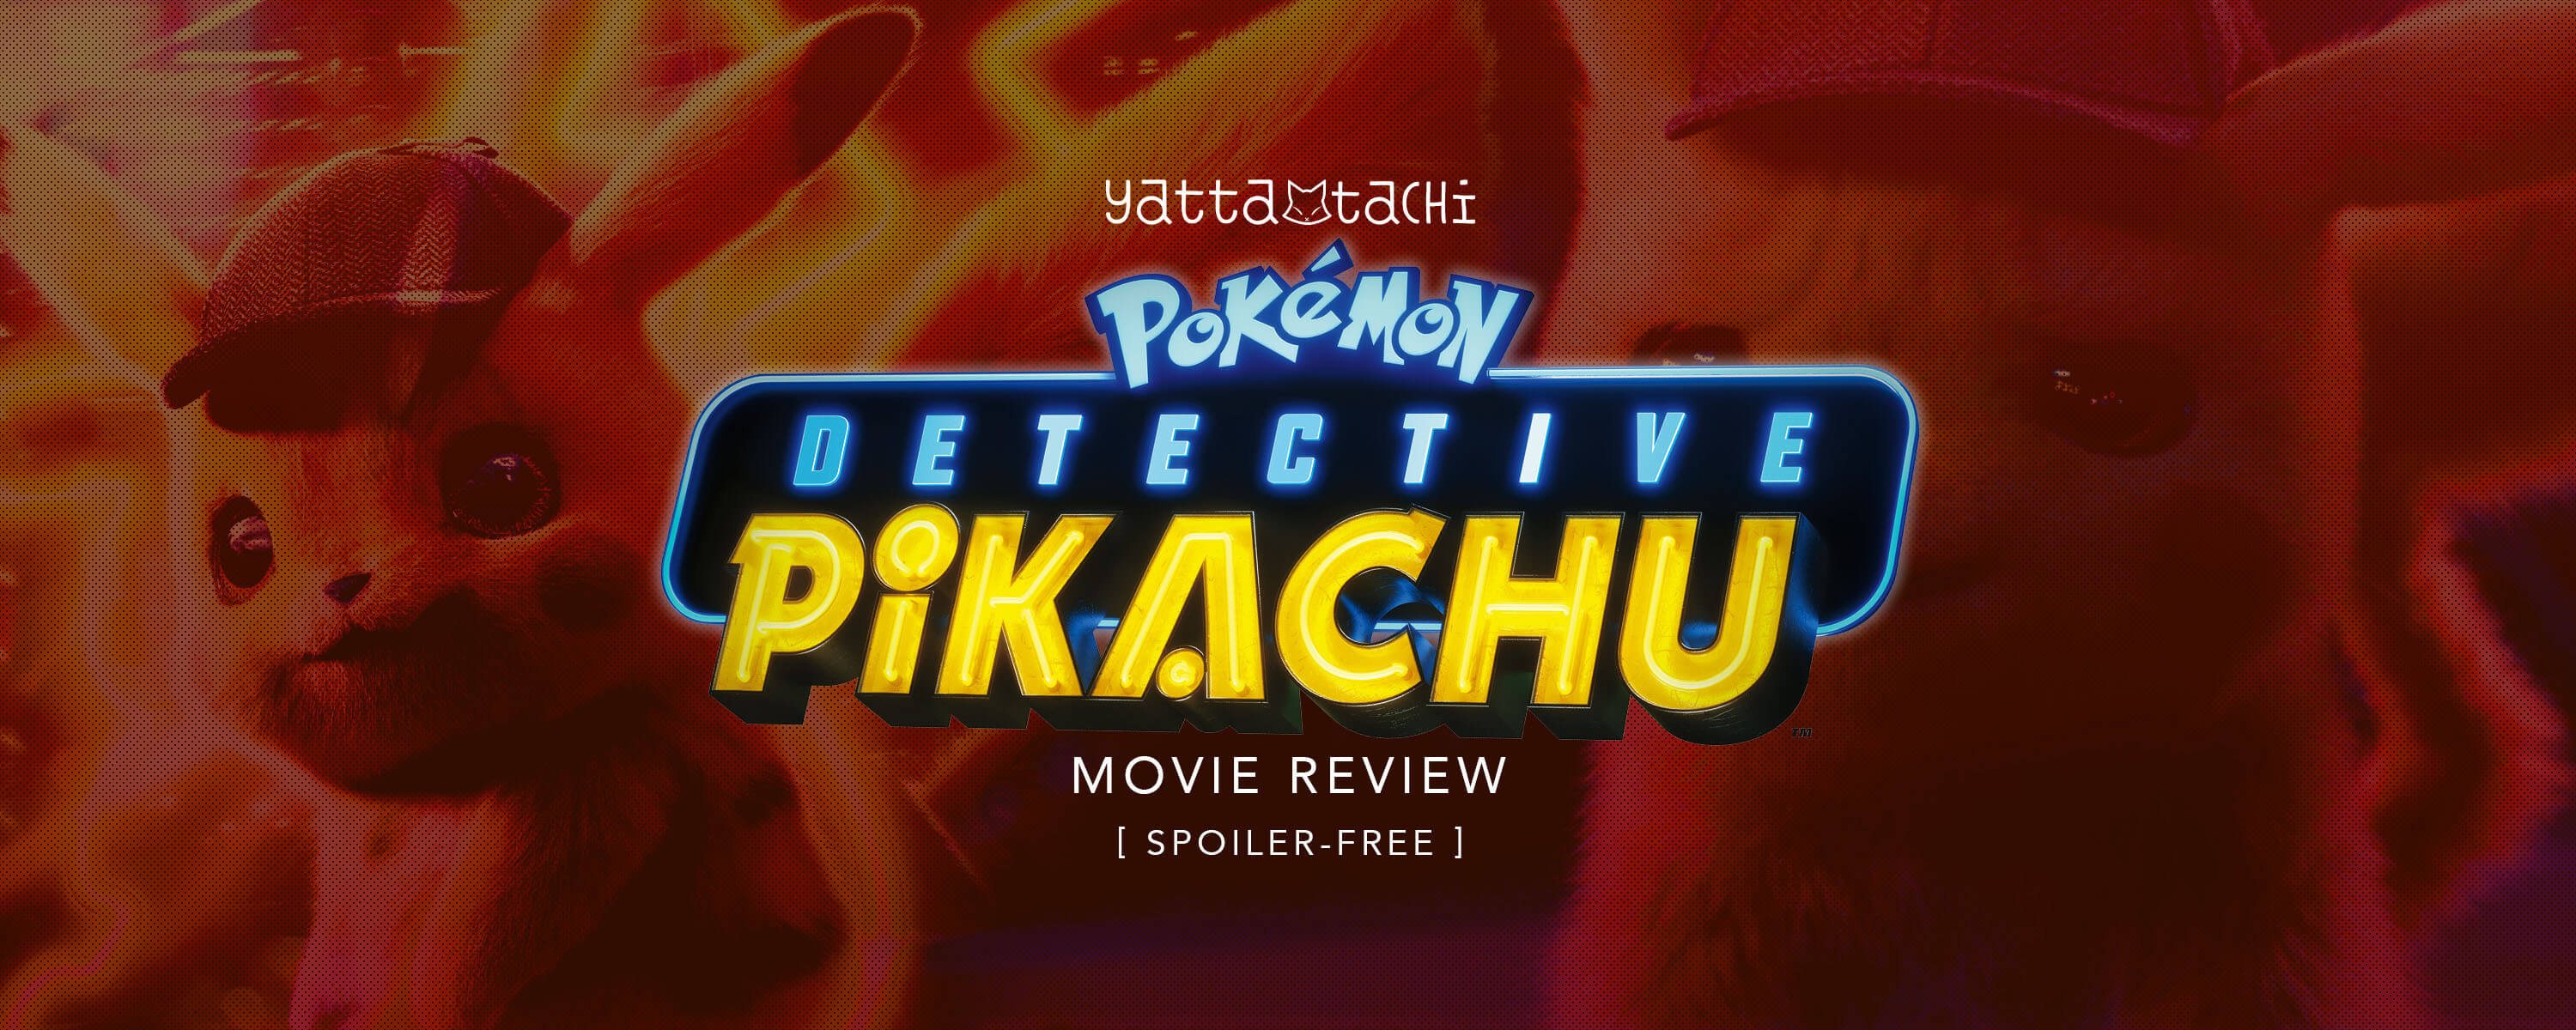 Pokémon Detective Pikachu Review Spoiler Free Yatta Tachi